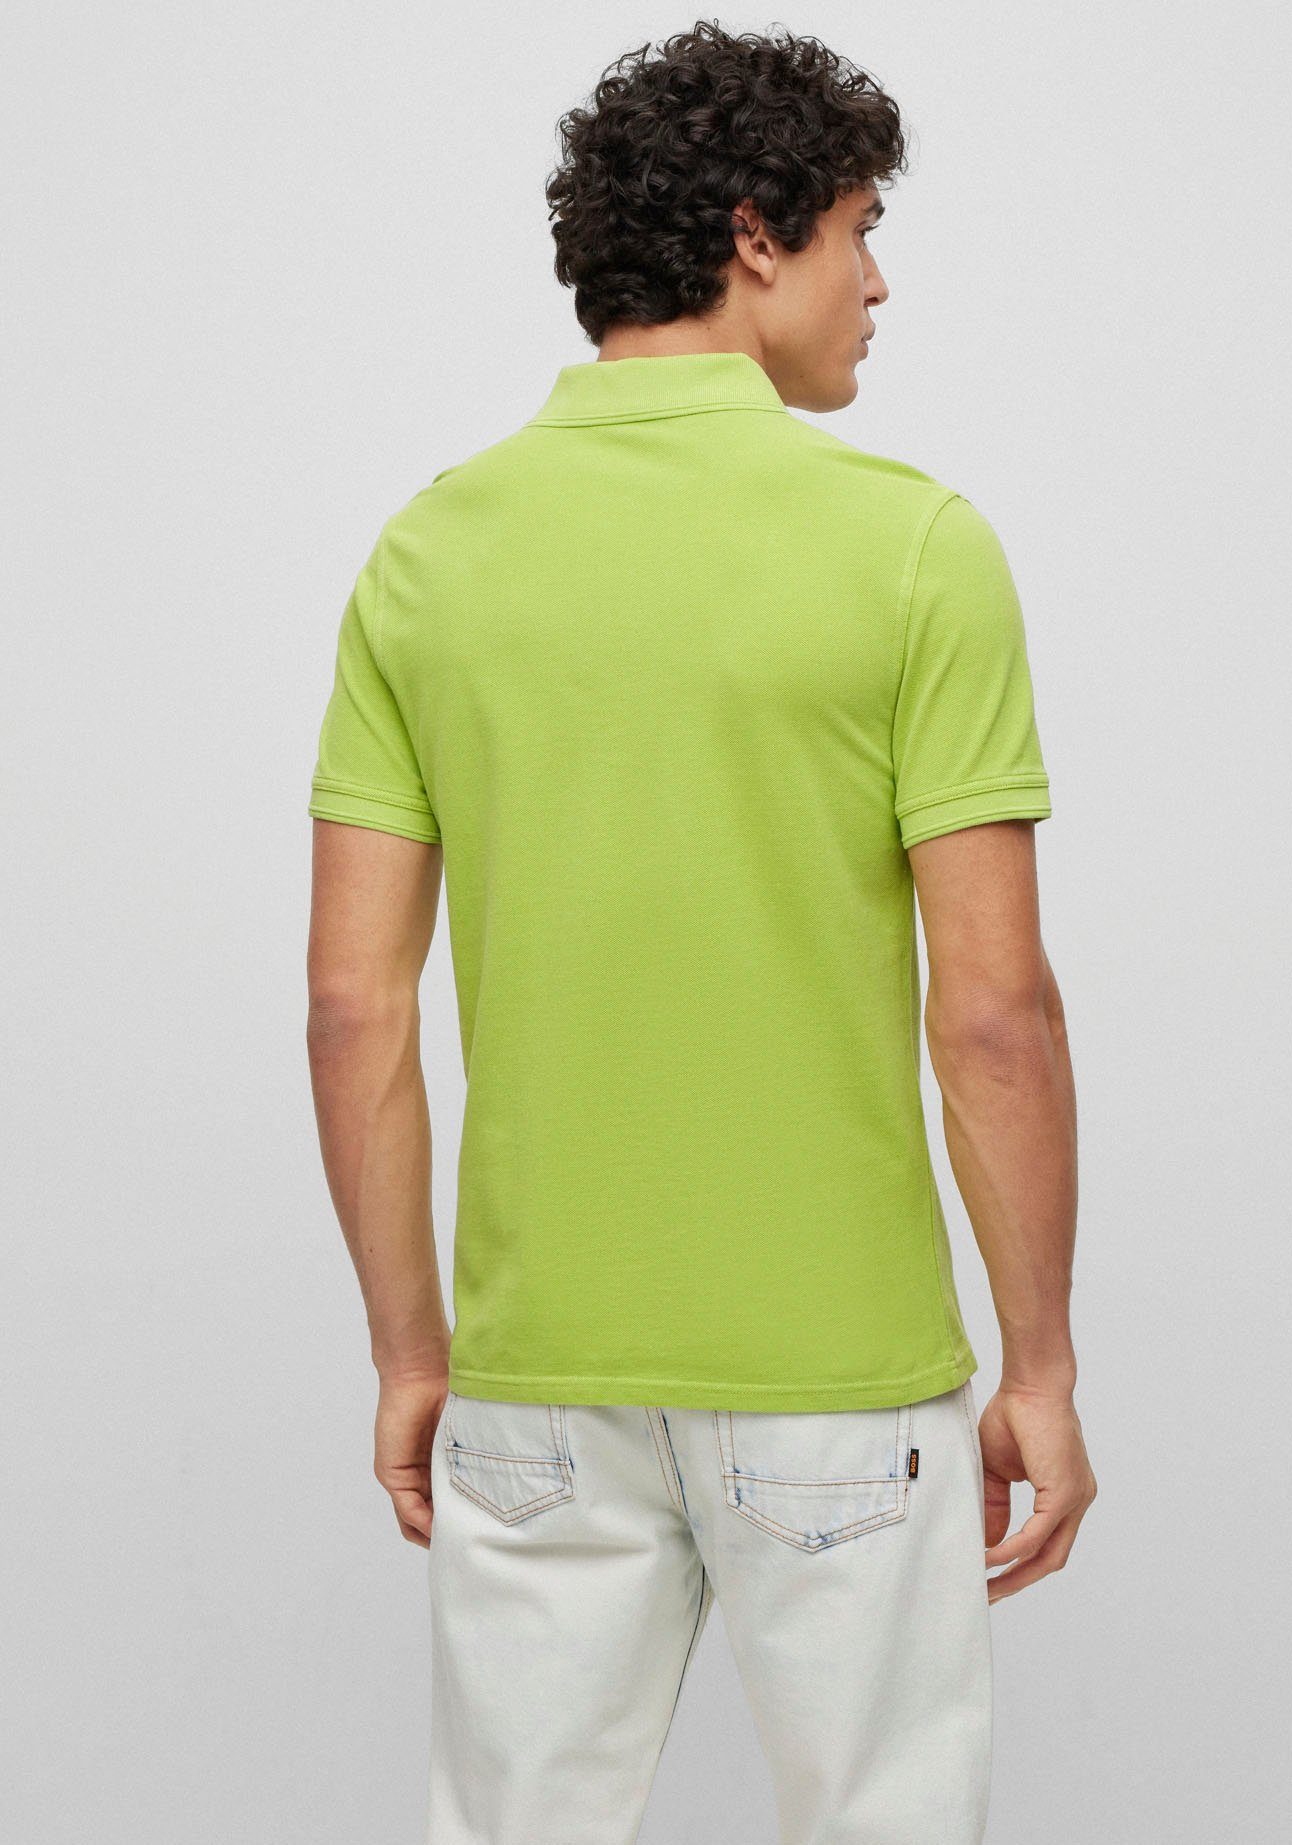 Poloshirt Prime BOSS Brustkorb Logoschriftzug Bright am mit ORANGE Green